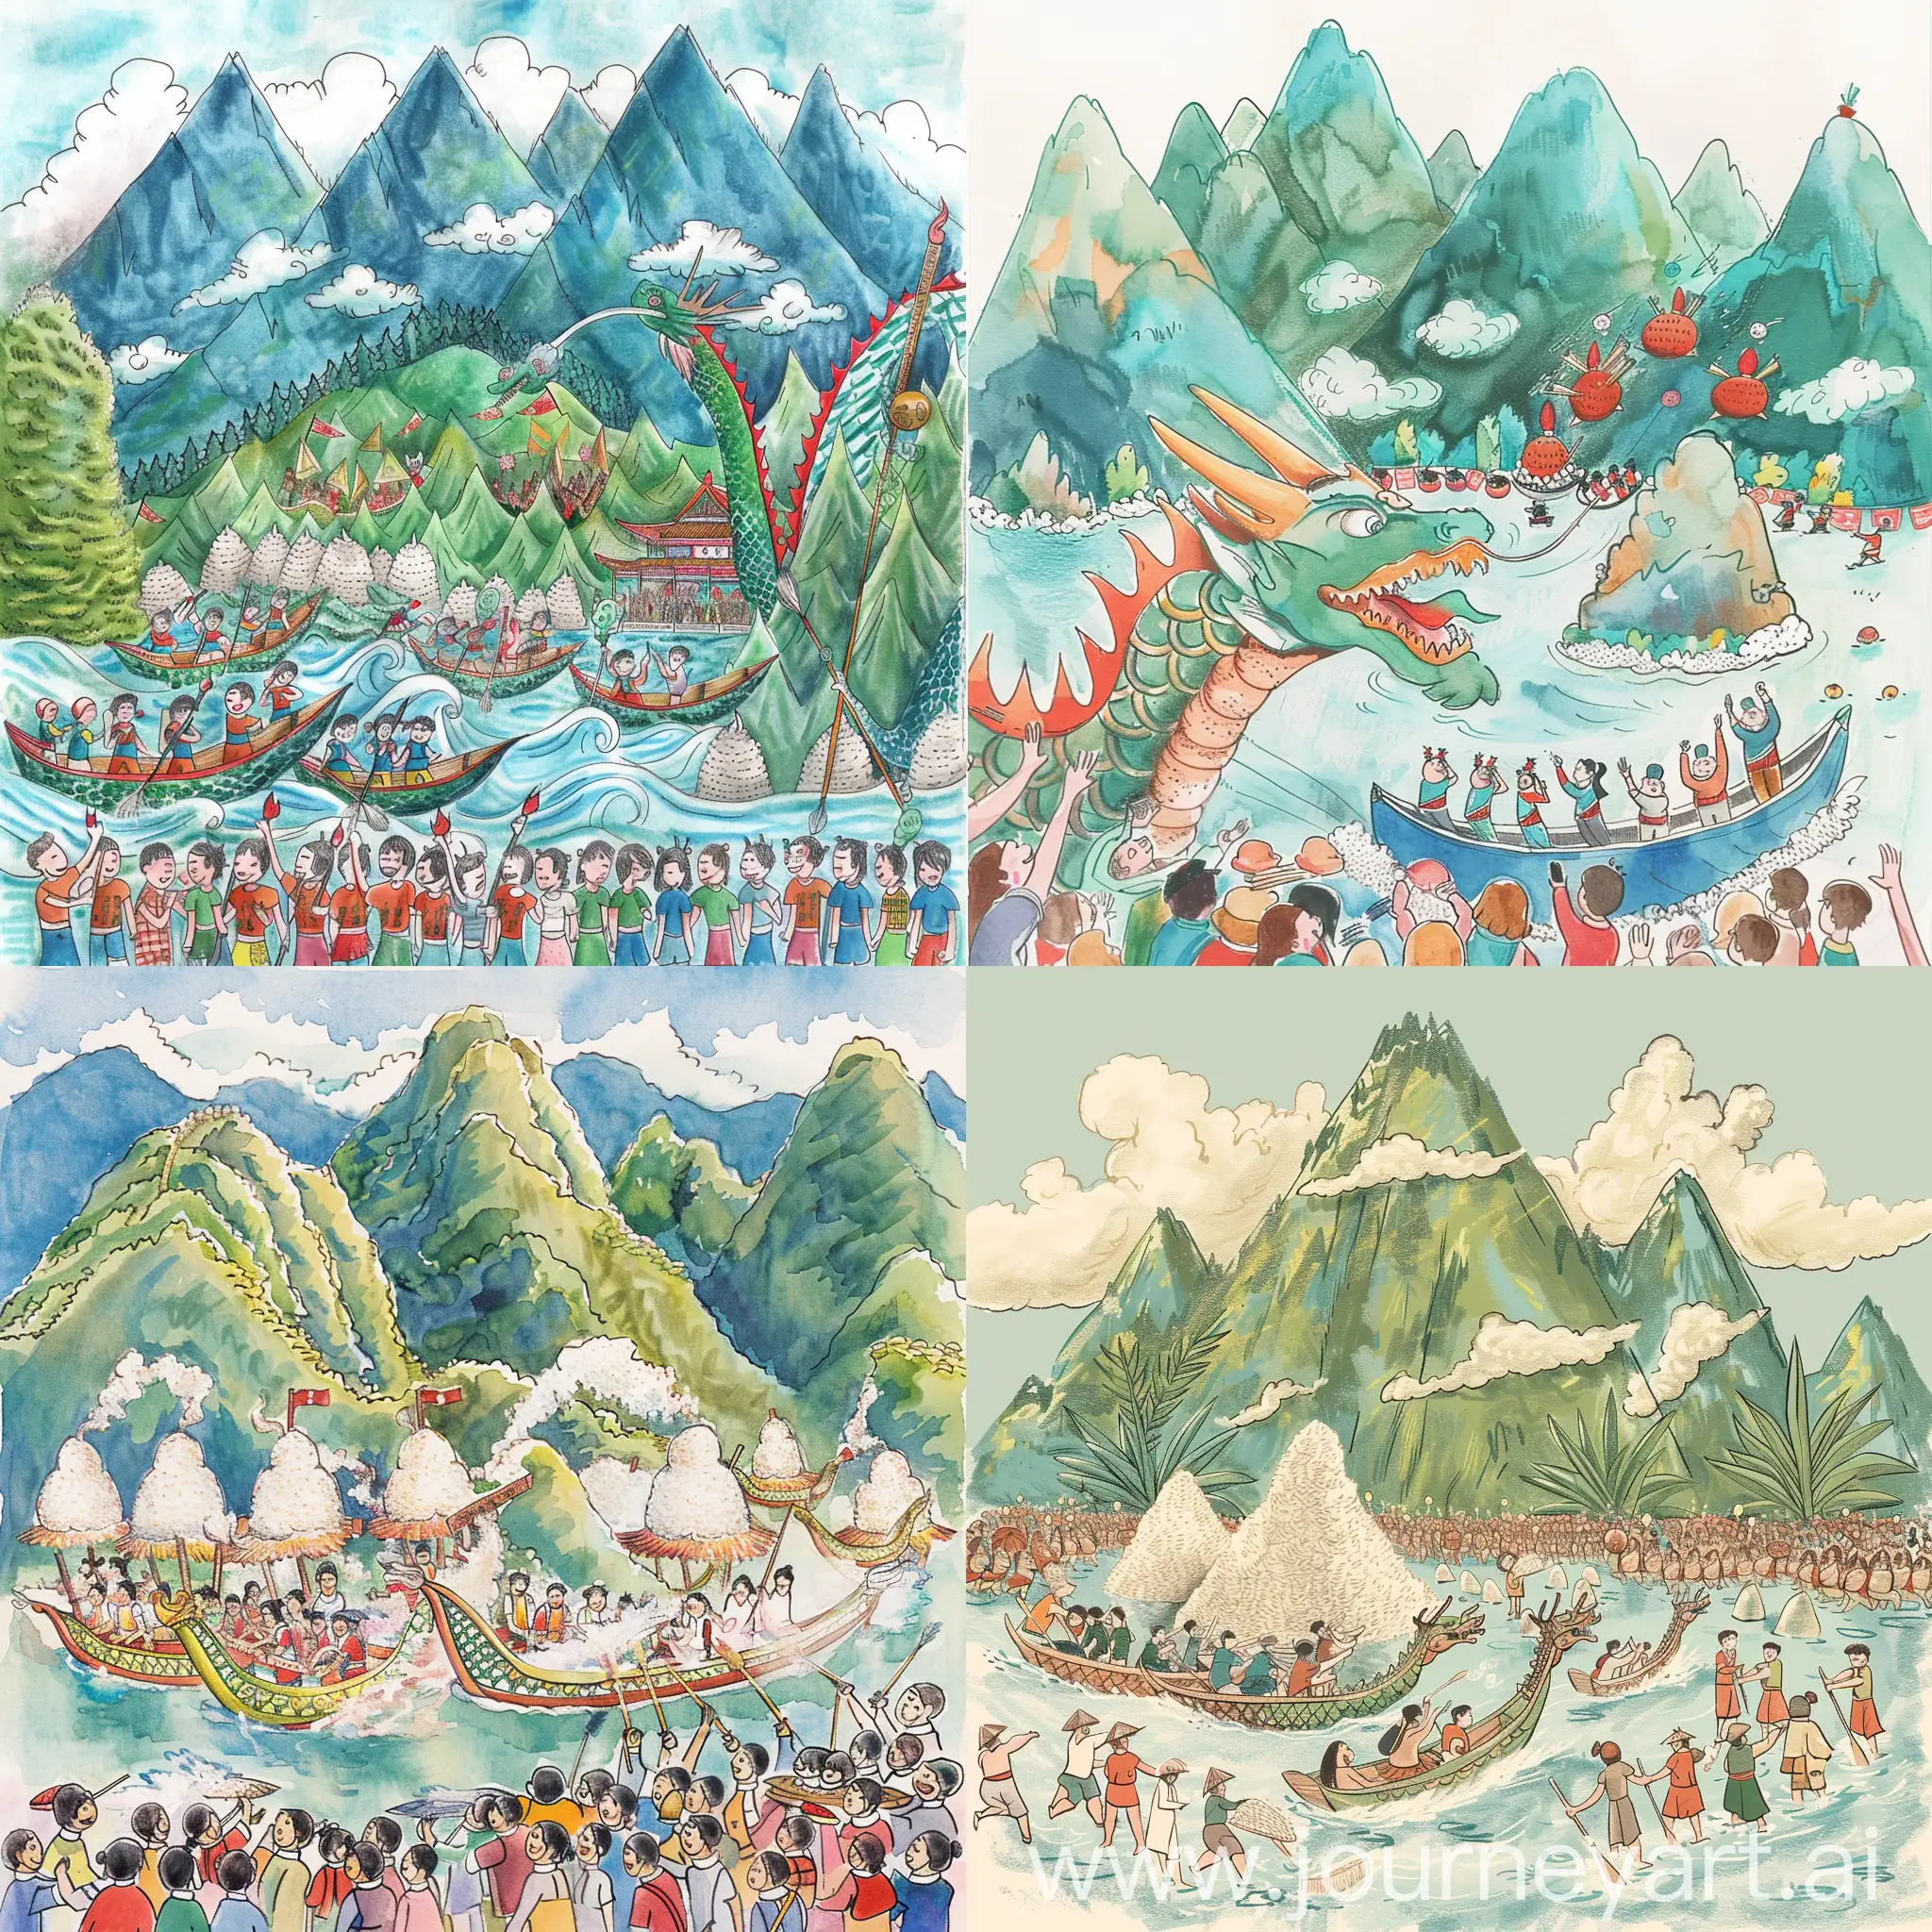 Joyful-Dragon-Boat-Festival-Exciting-Dragon-Boat-Race-and-Festive-Celebrations